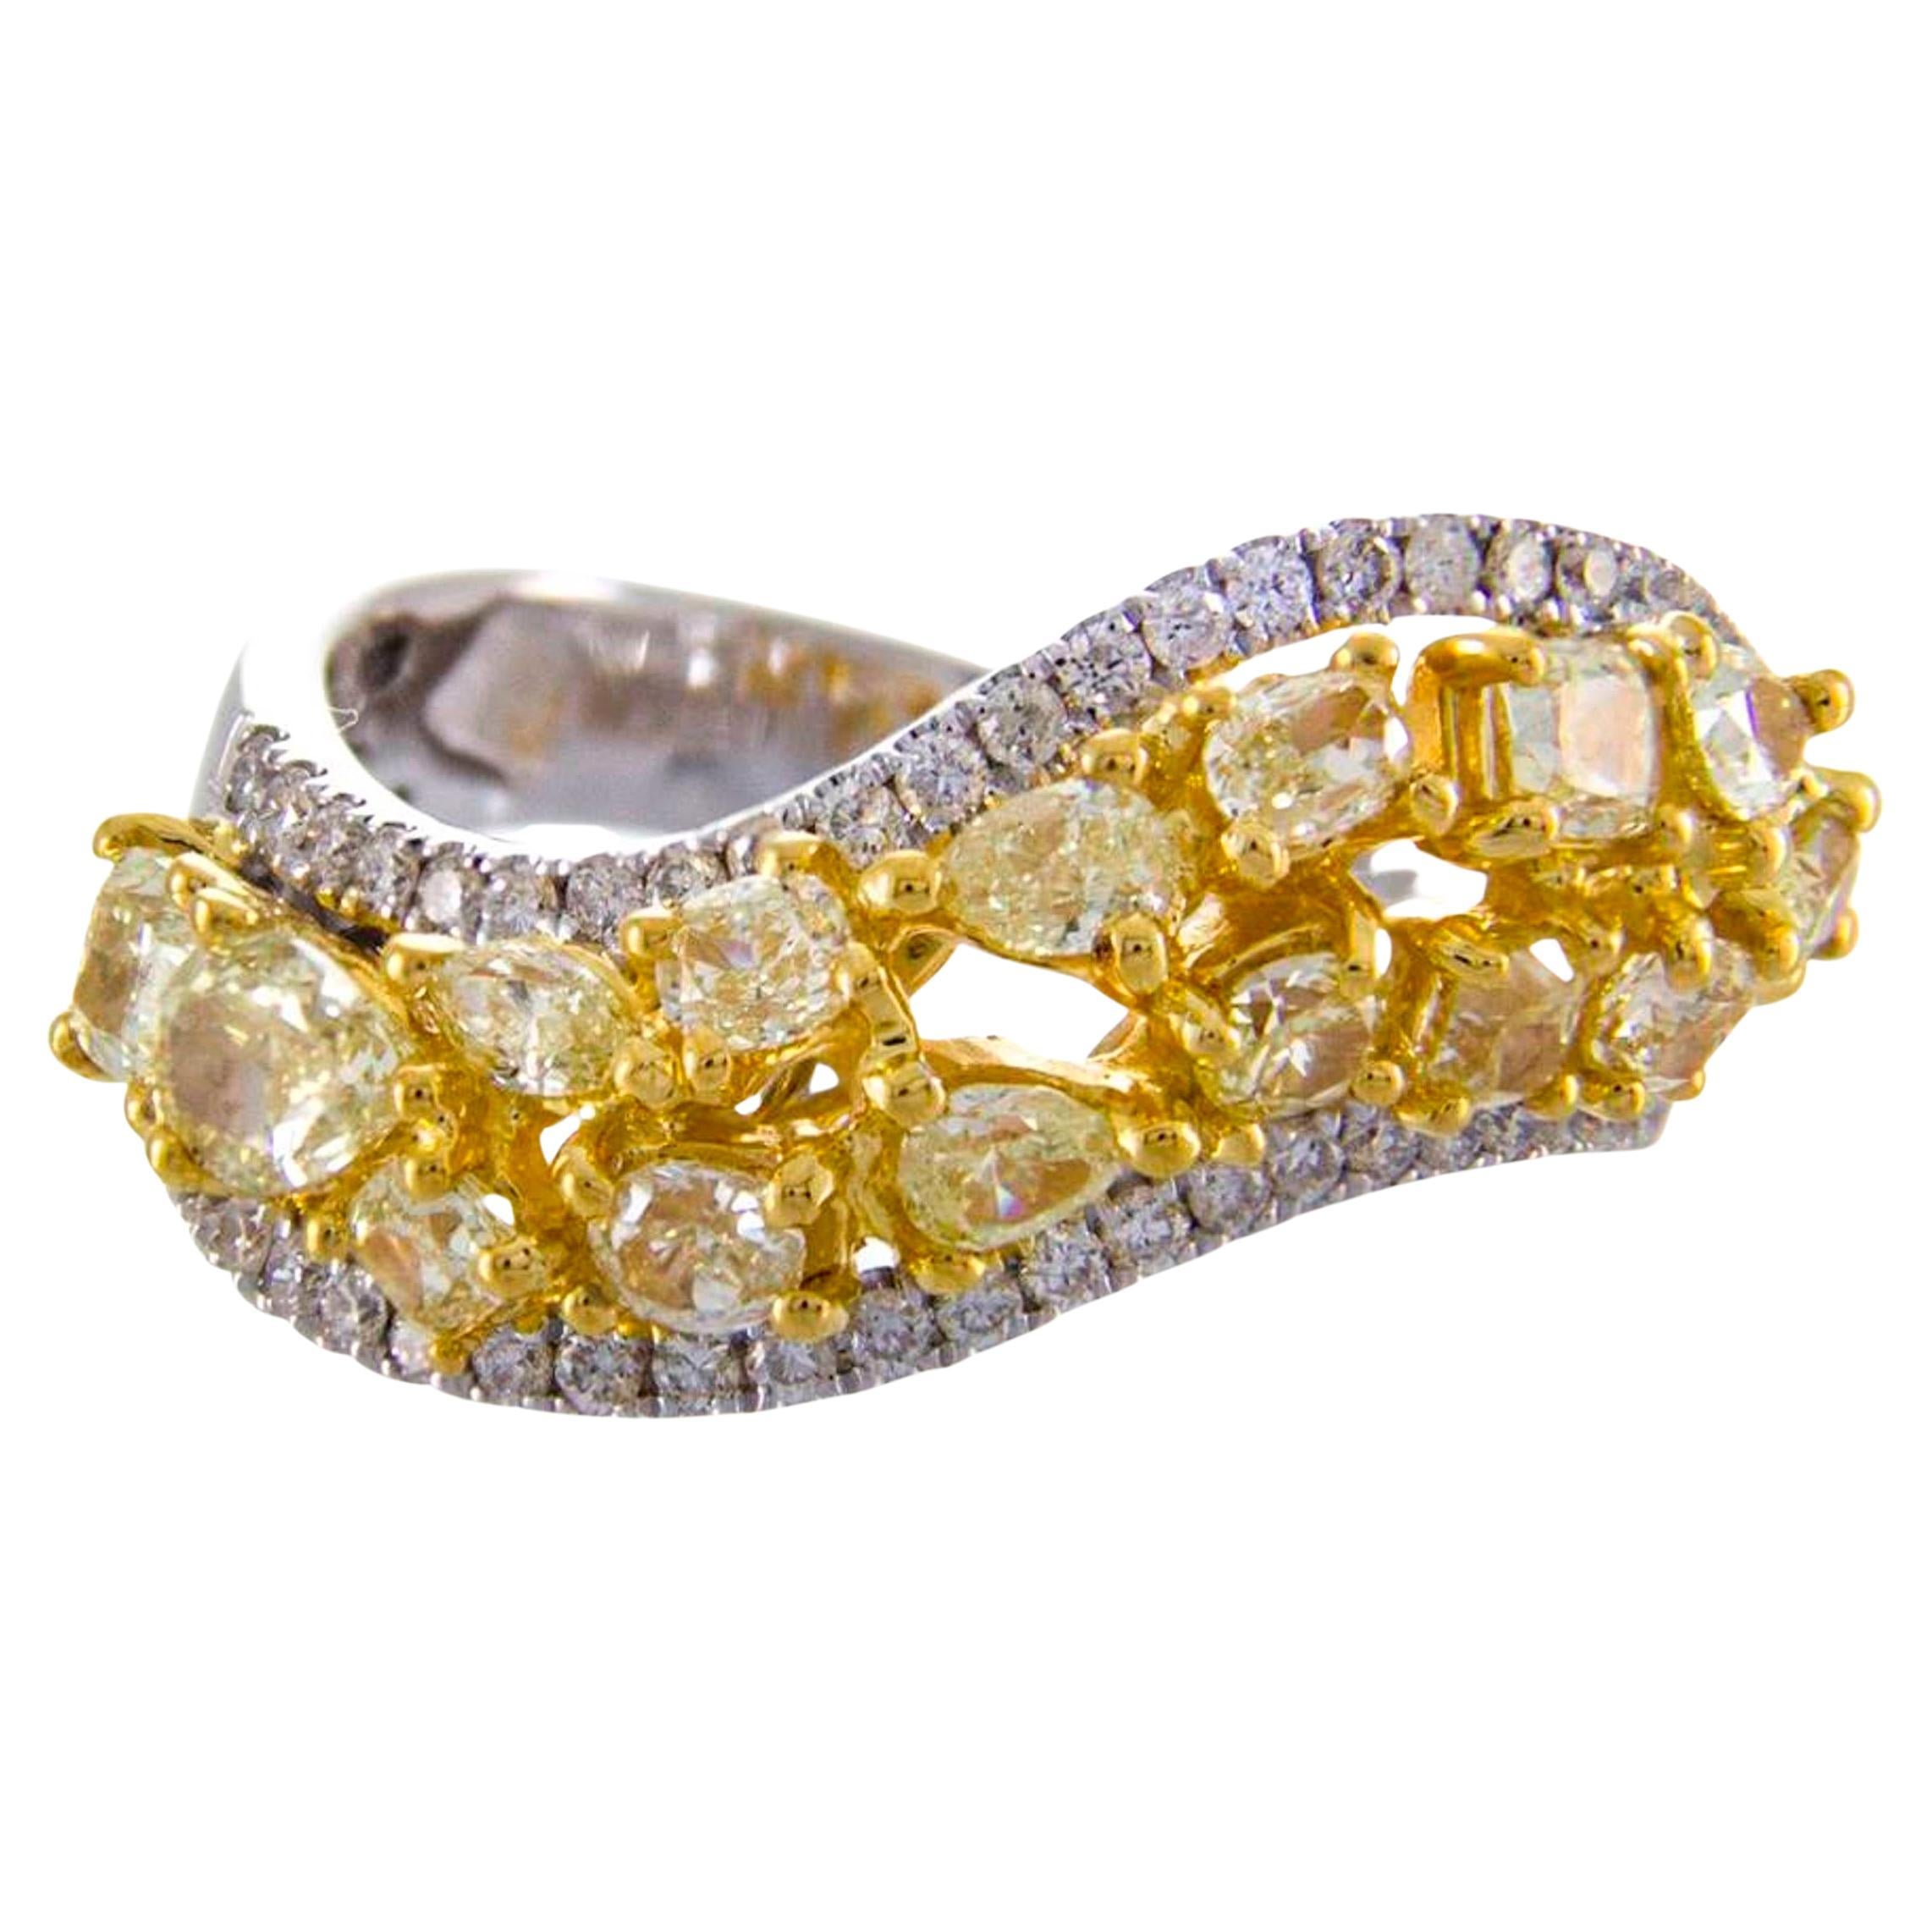 Gin & Grace Yellow Diamond with Round-Cut White Diamonds 18k TT Gold Ring